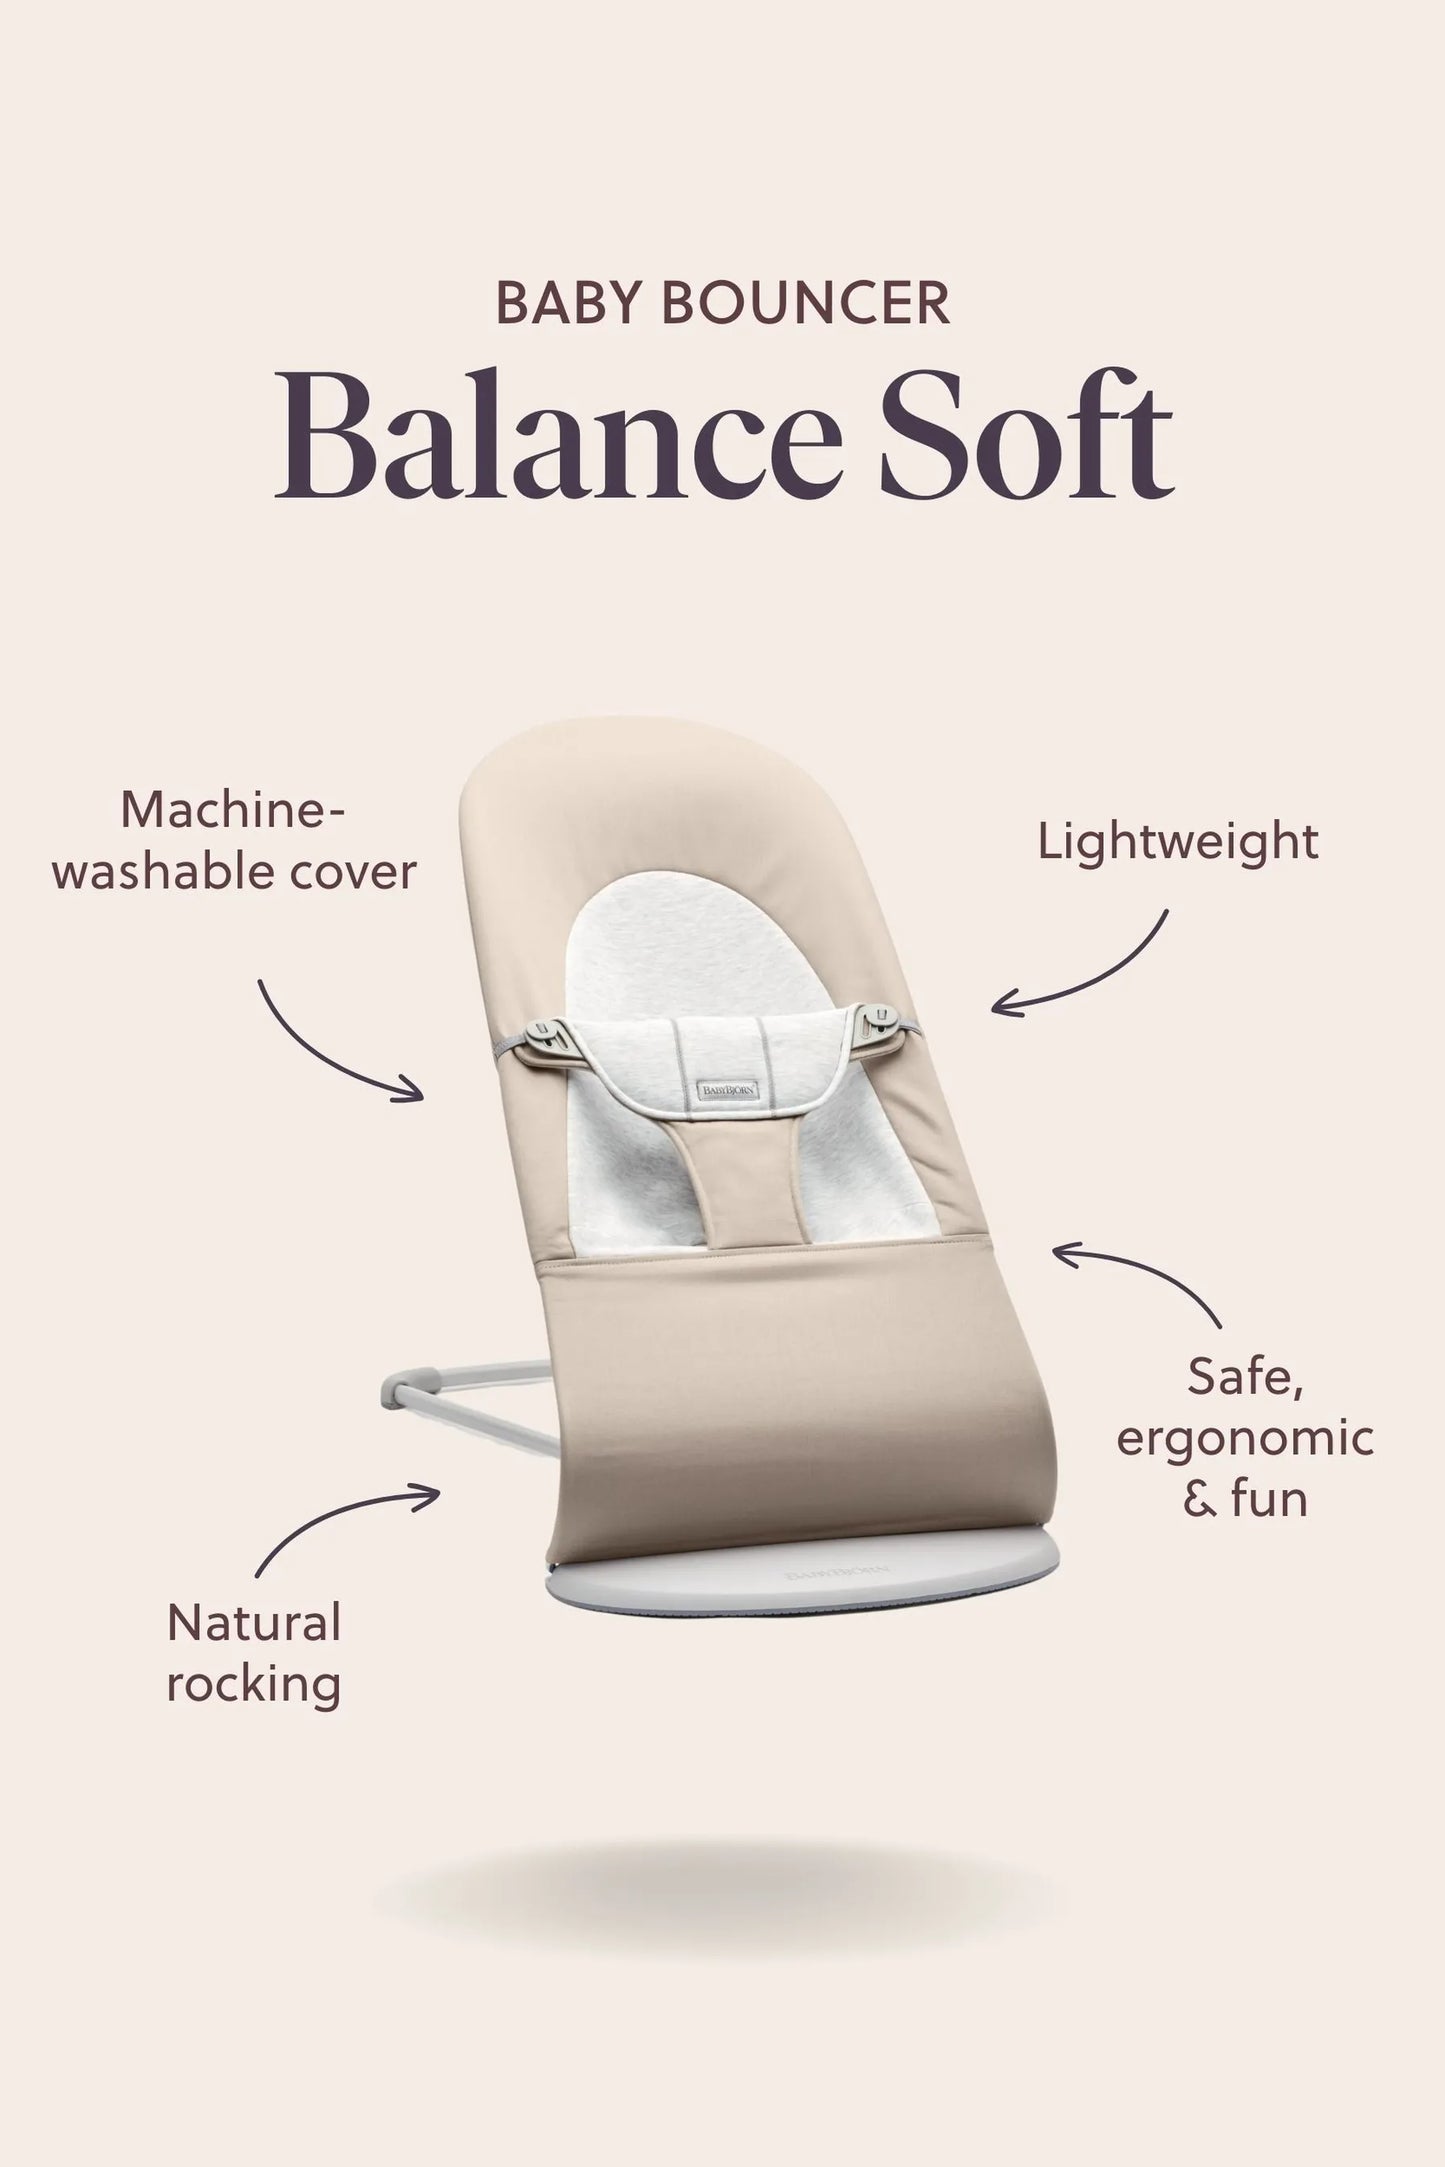 Soft Balance Bouncer